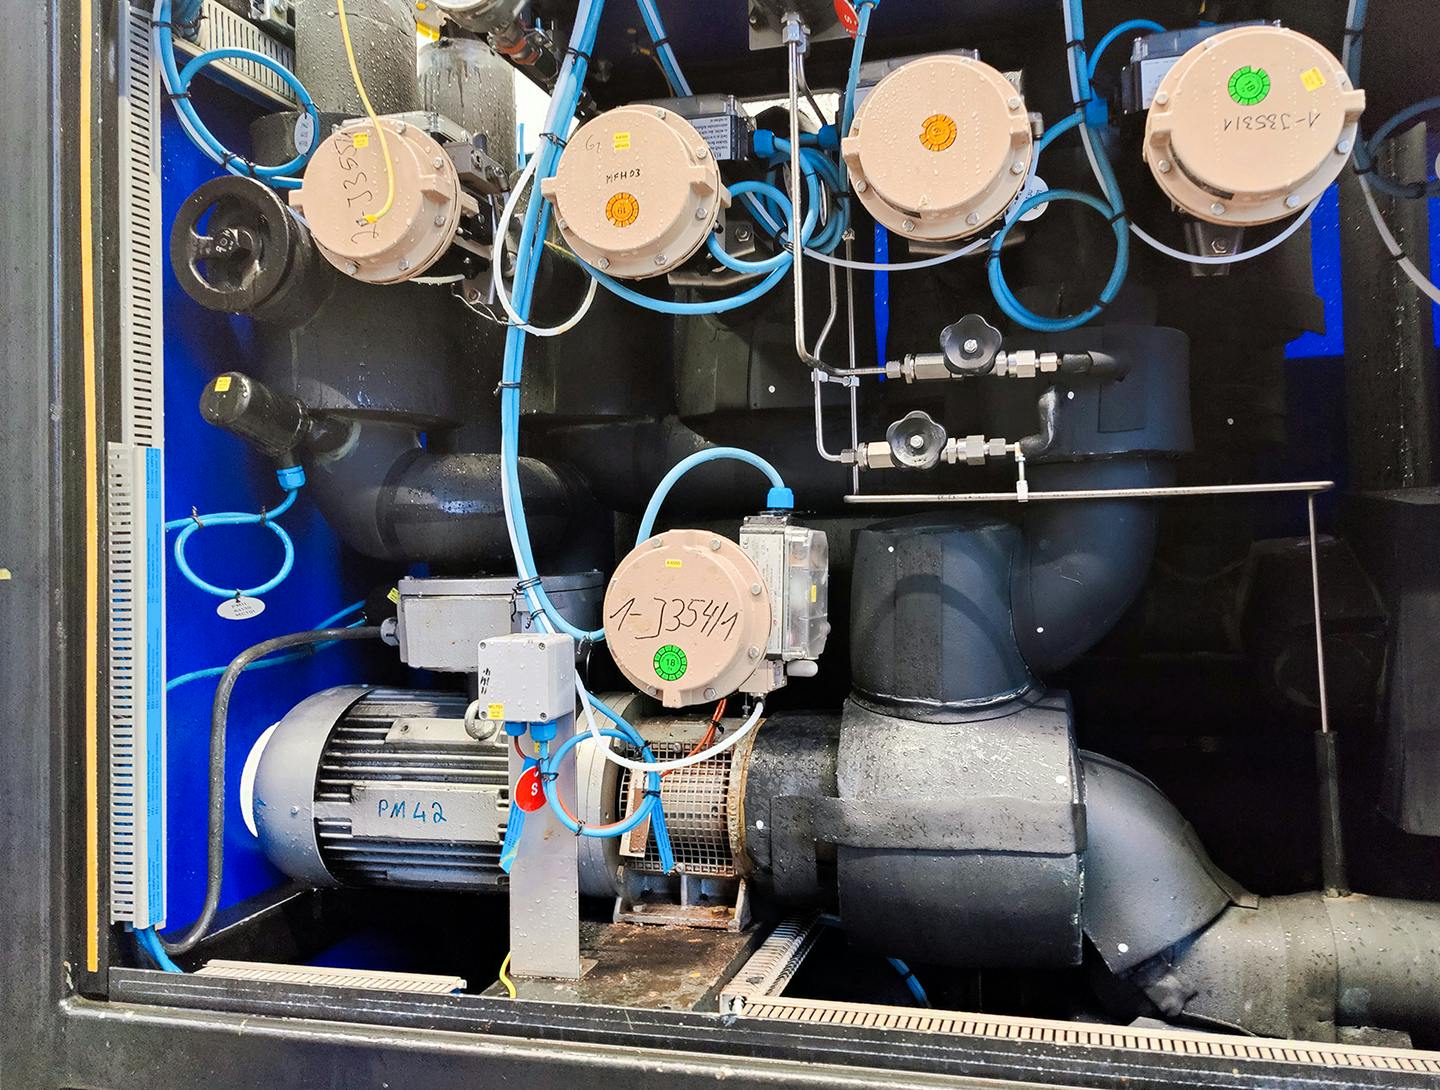 Lauda TR400 HKT/HKT-EX "secondary circuit system" - Temperature control unit - image 11